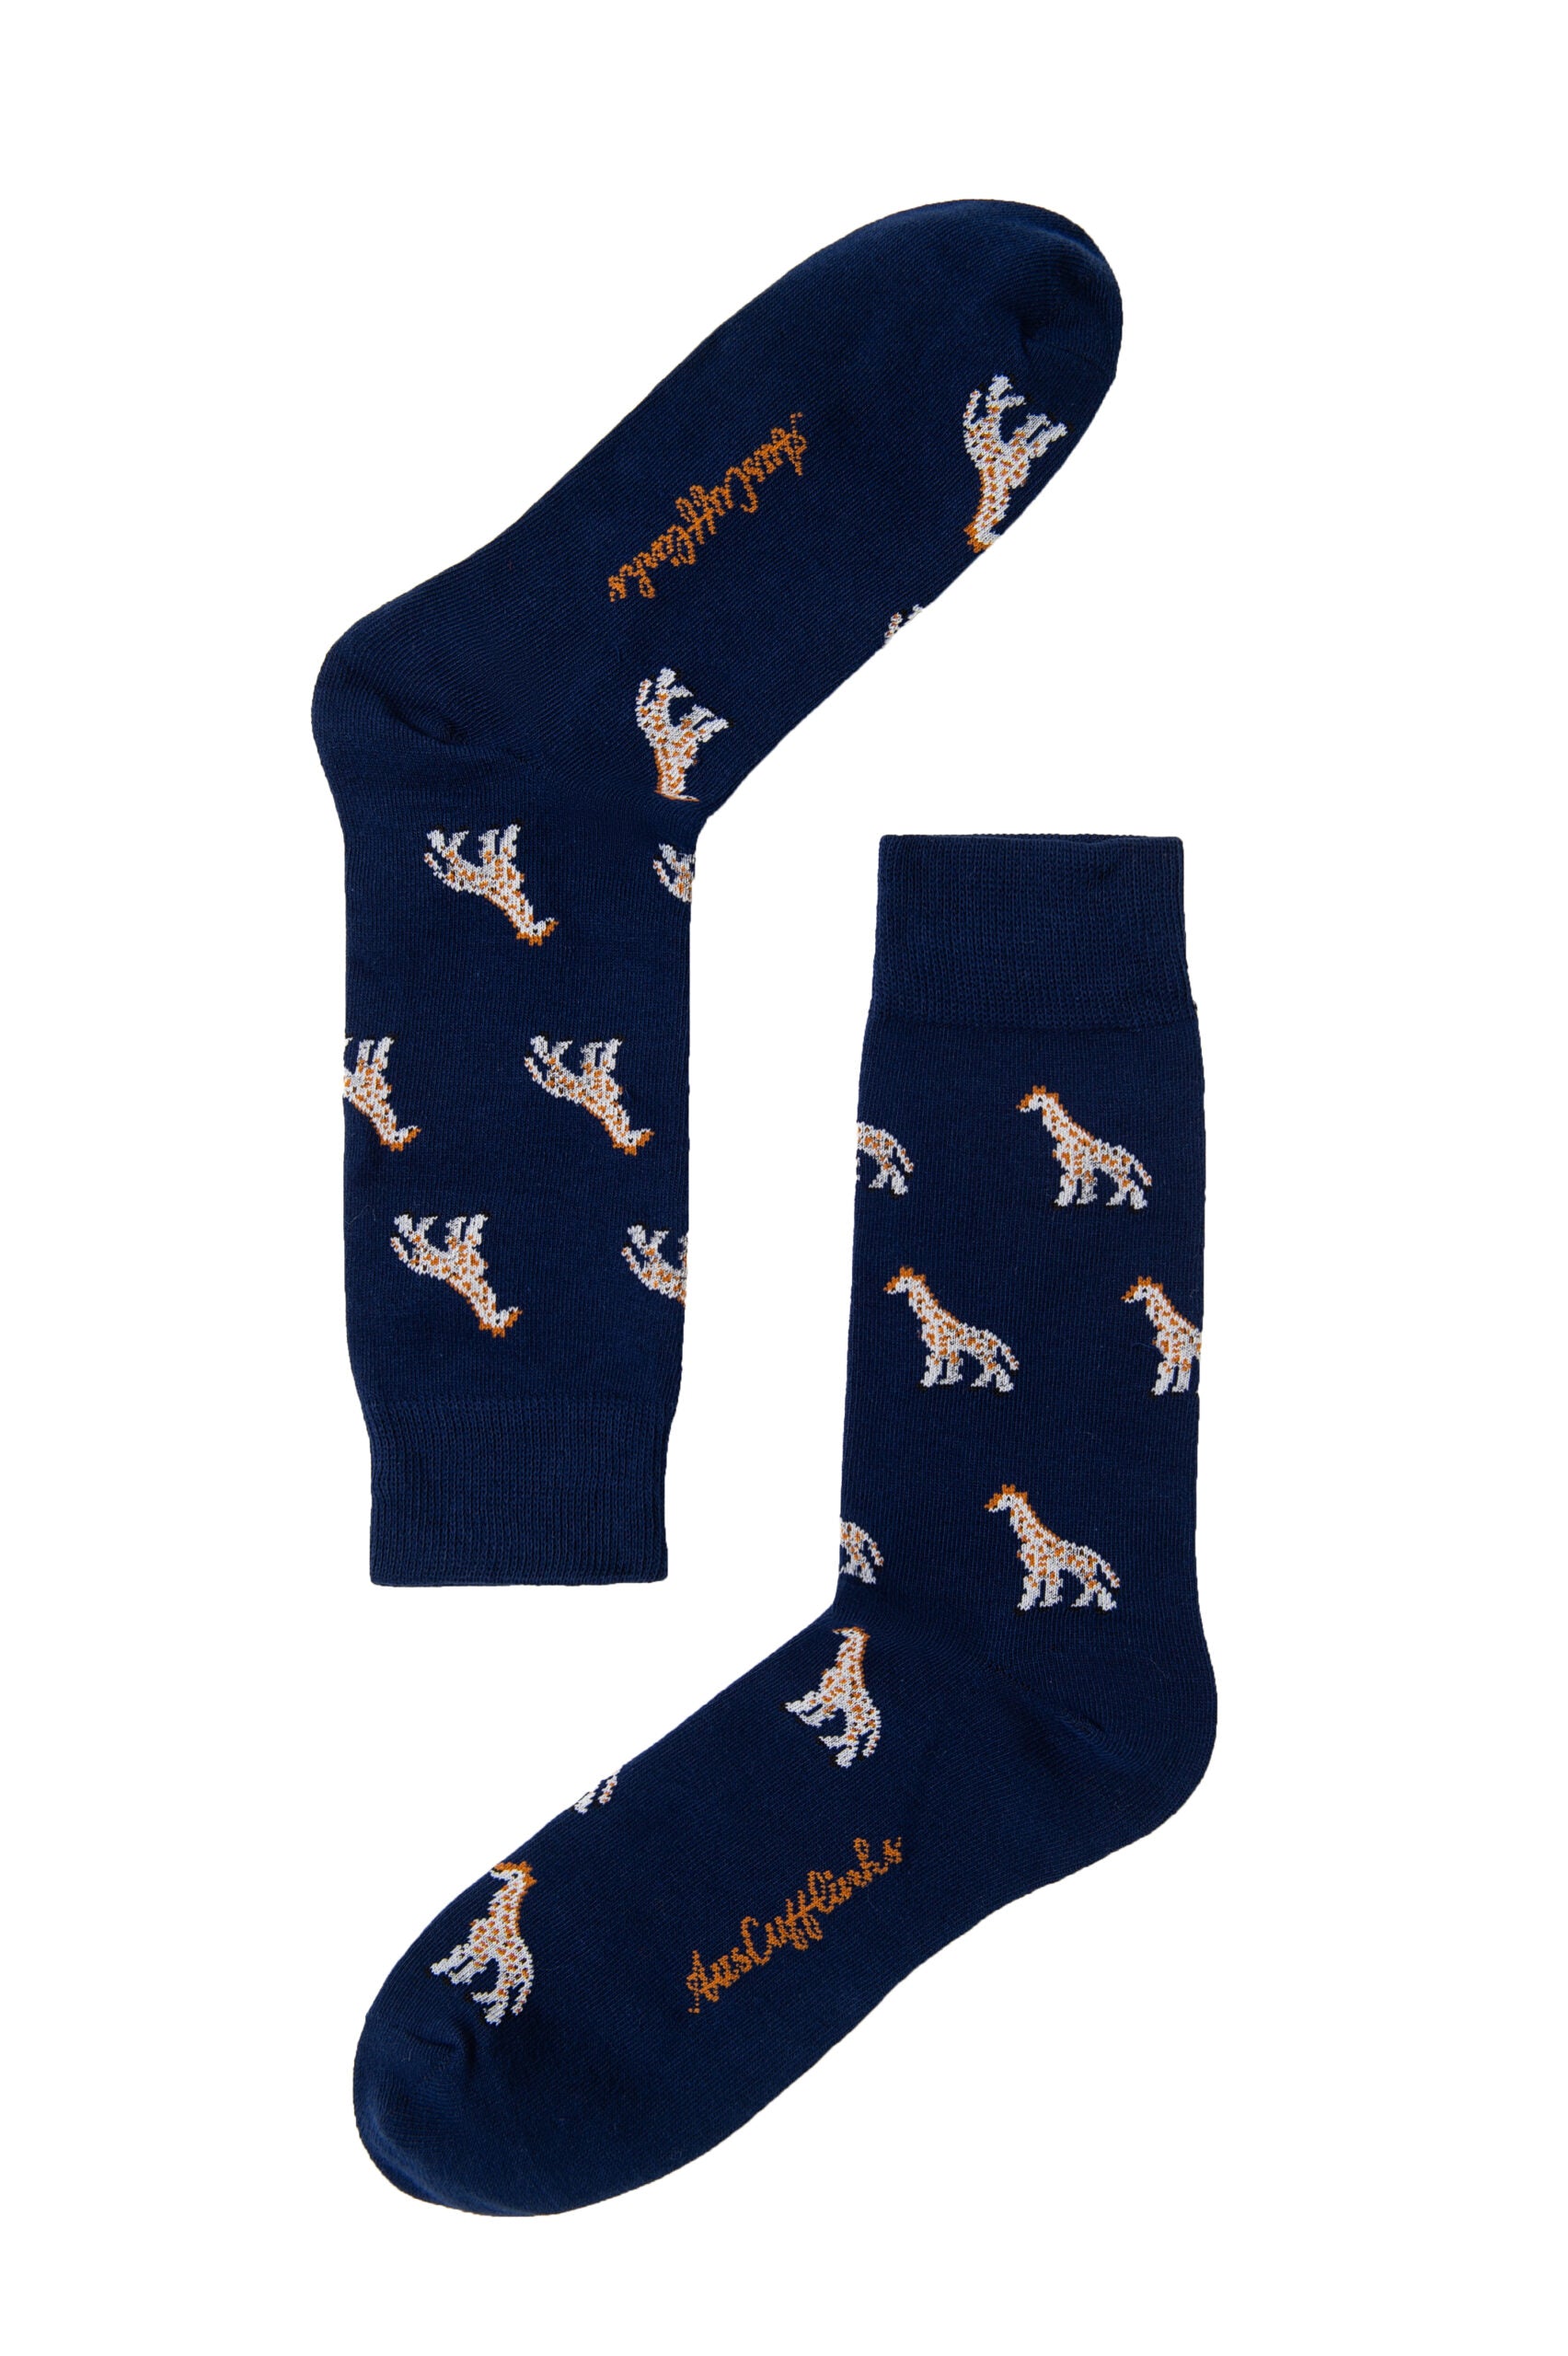 A Giraffe Socks pair of socks.